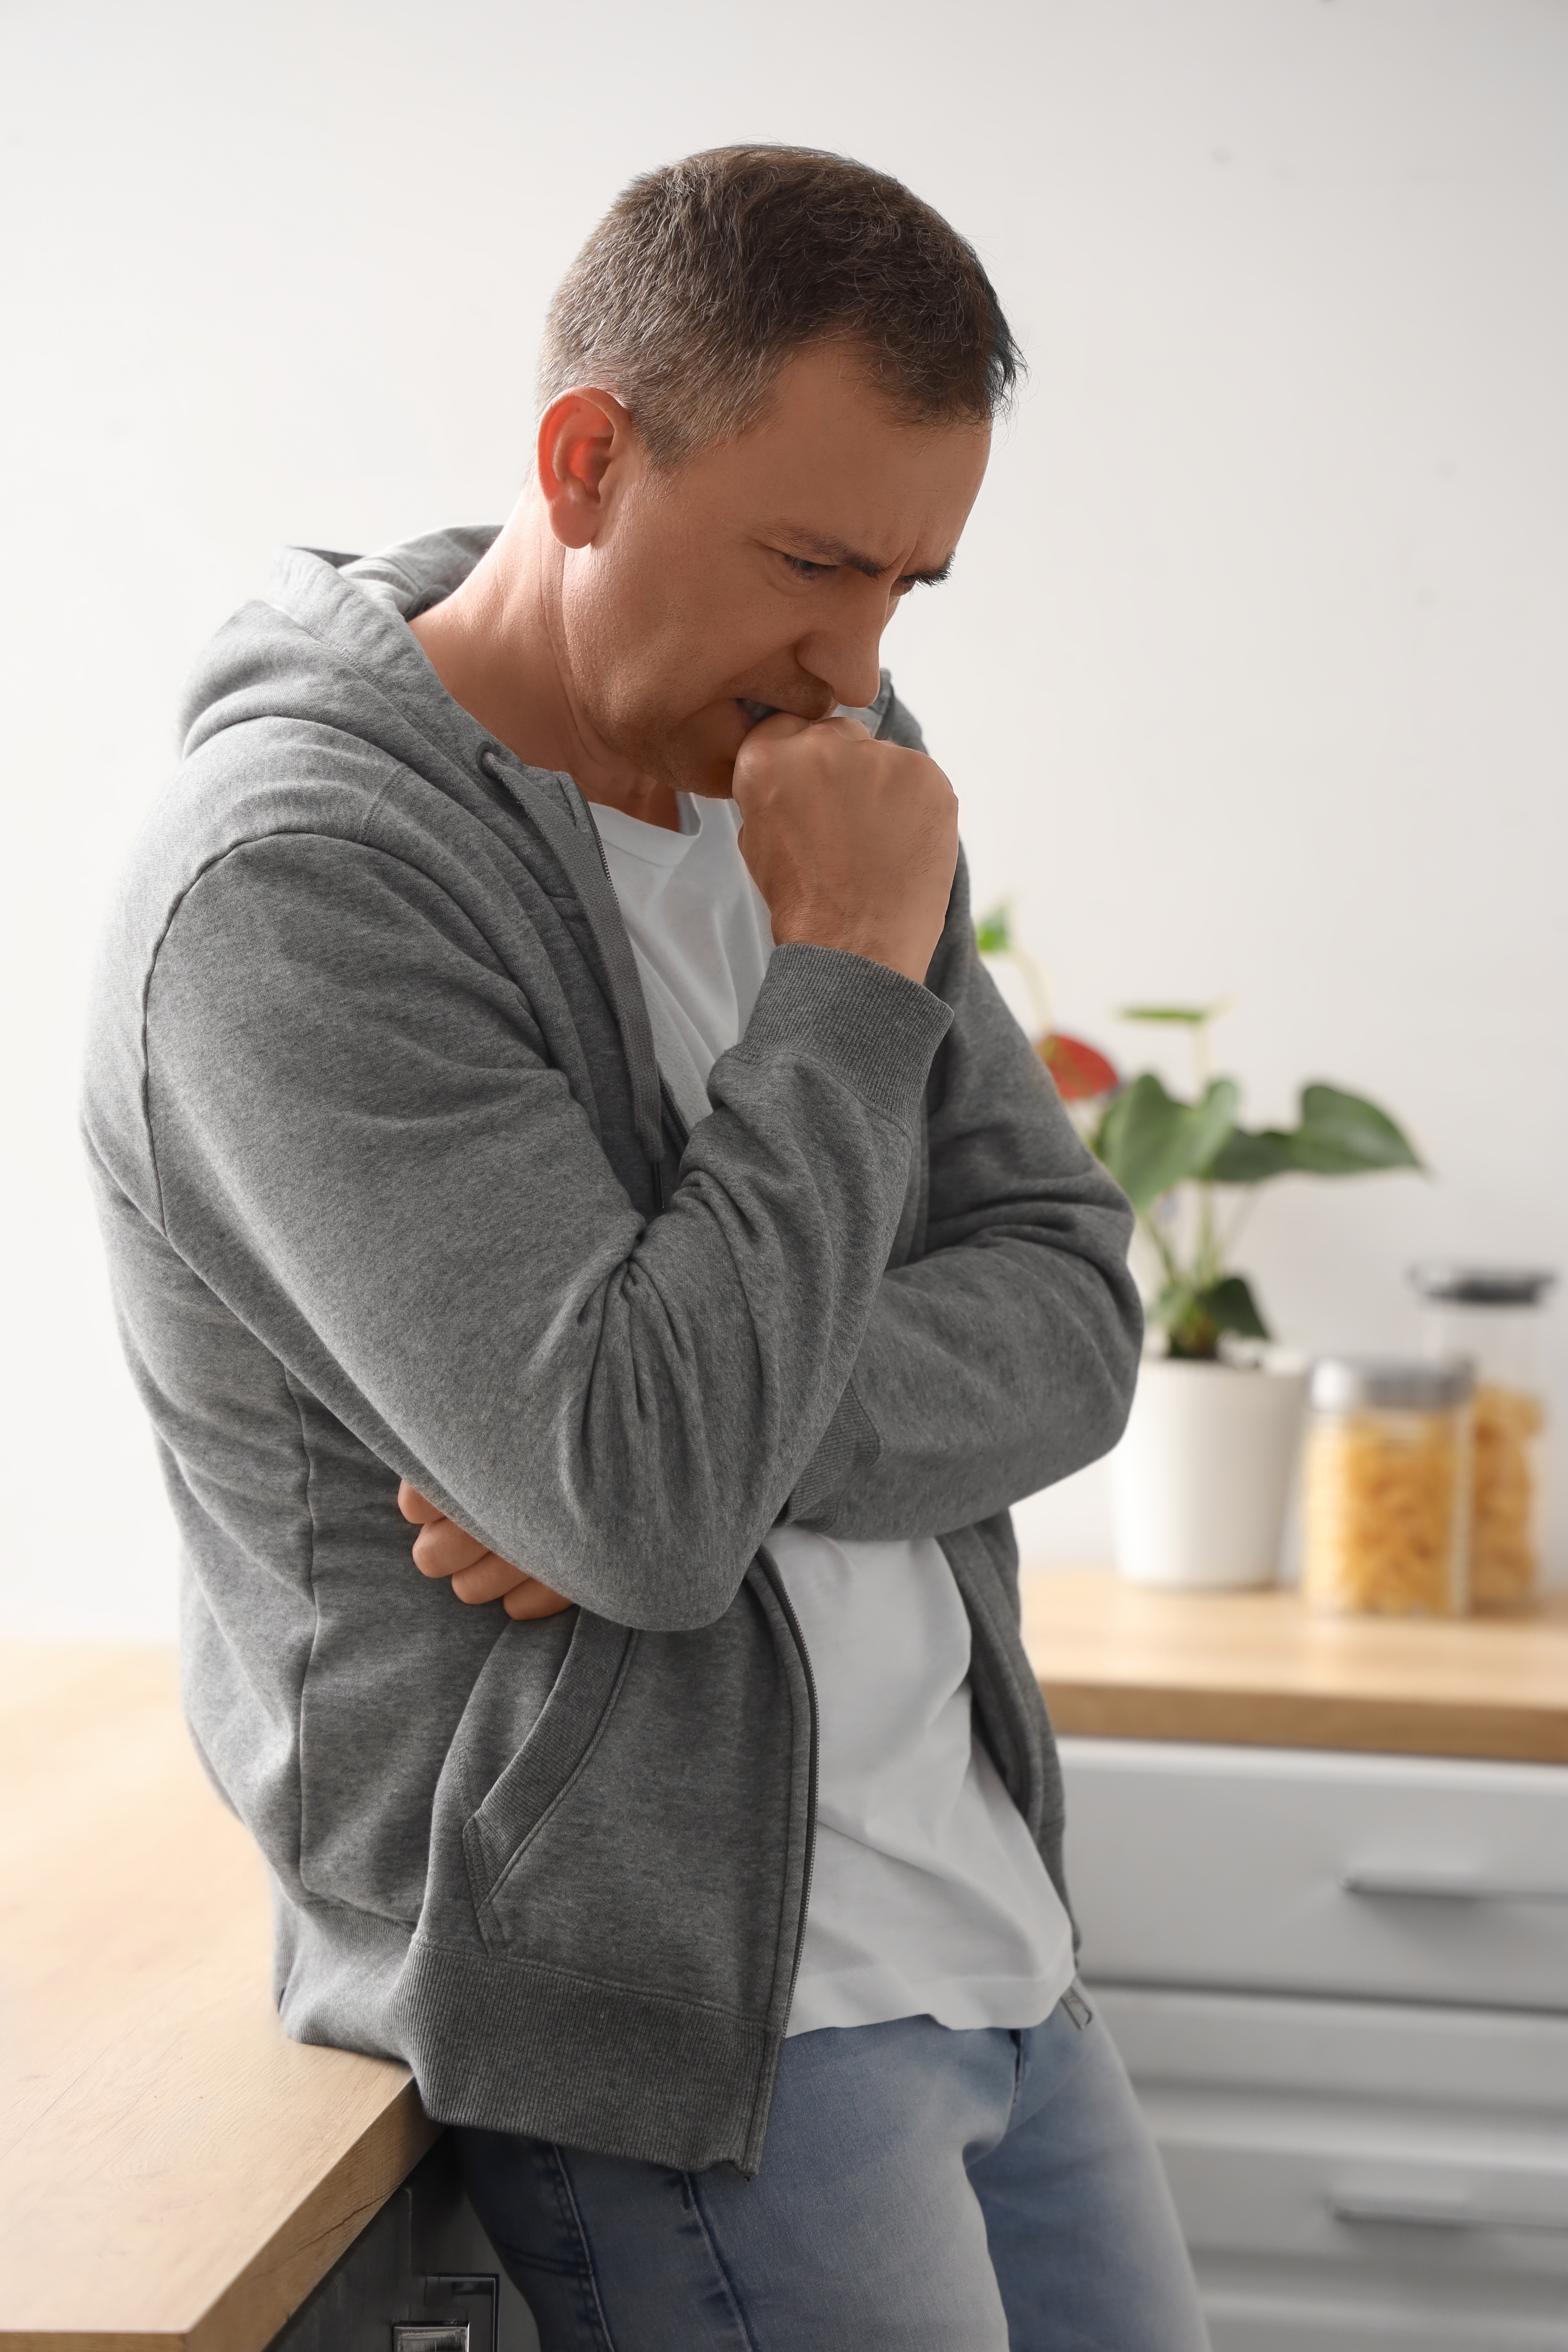 Mature man having panic attack in kitchen. | Source: Shutterstock